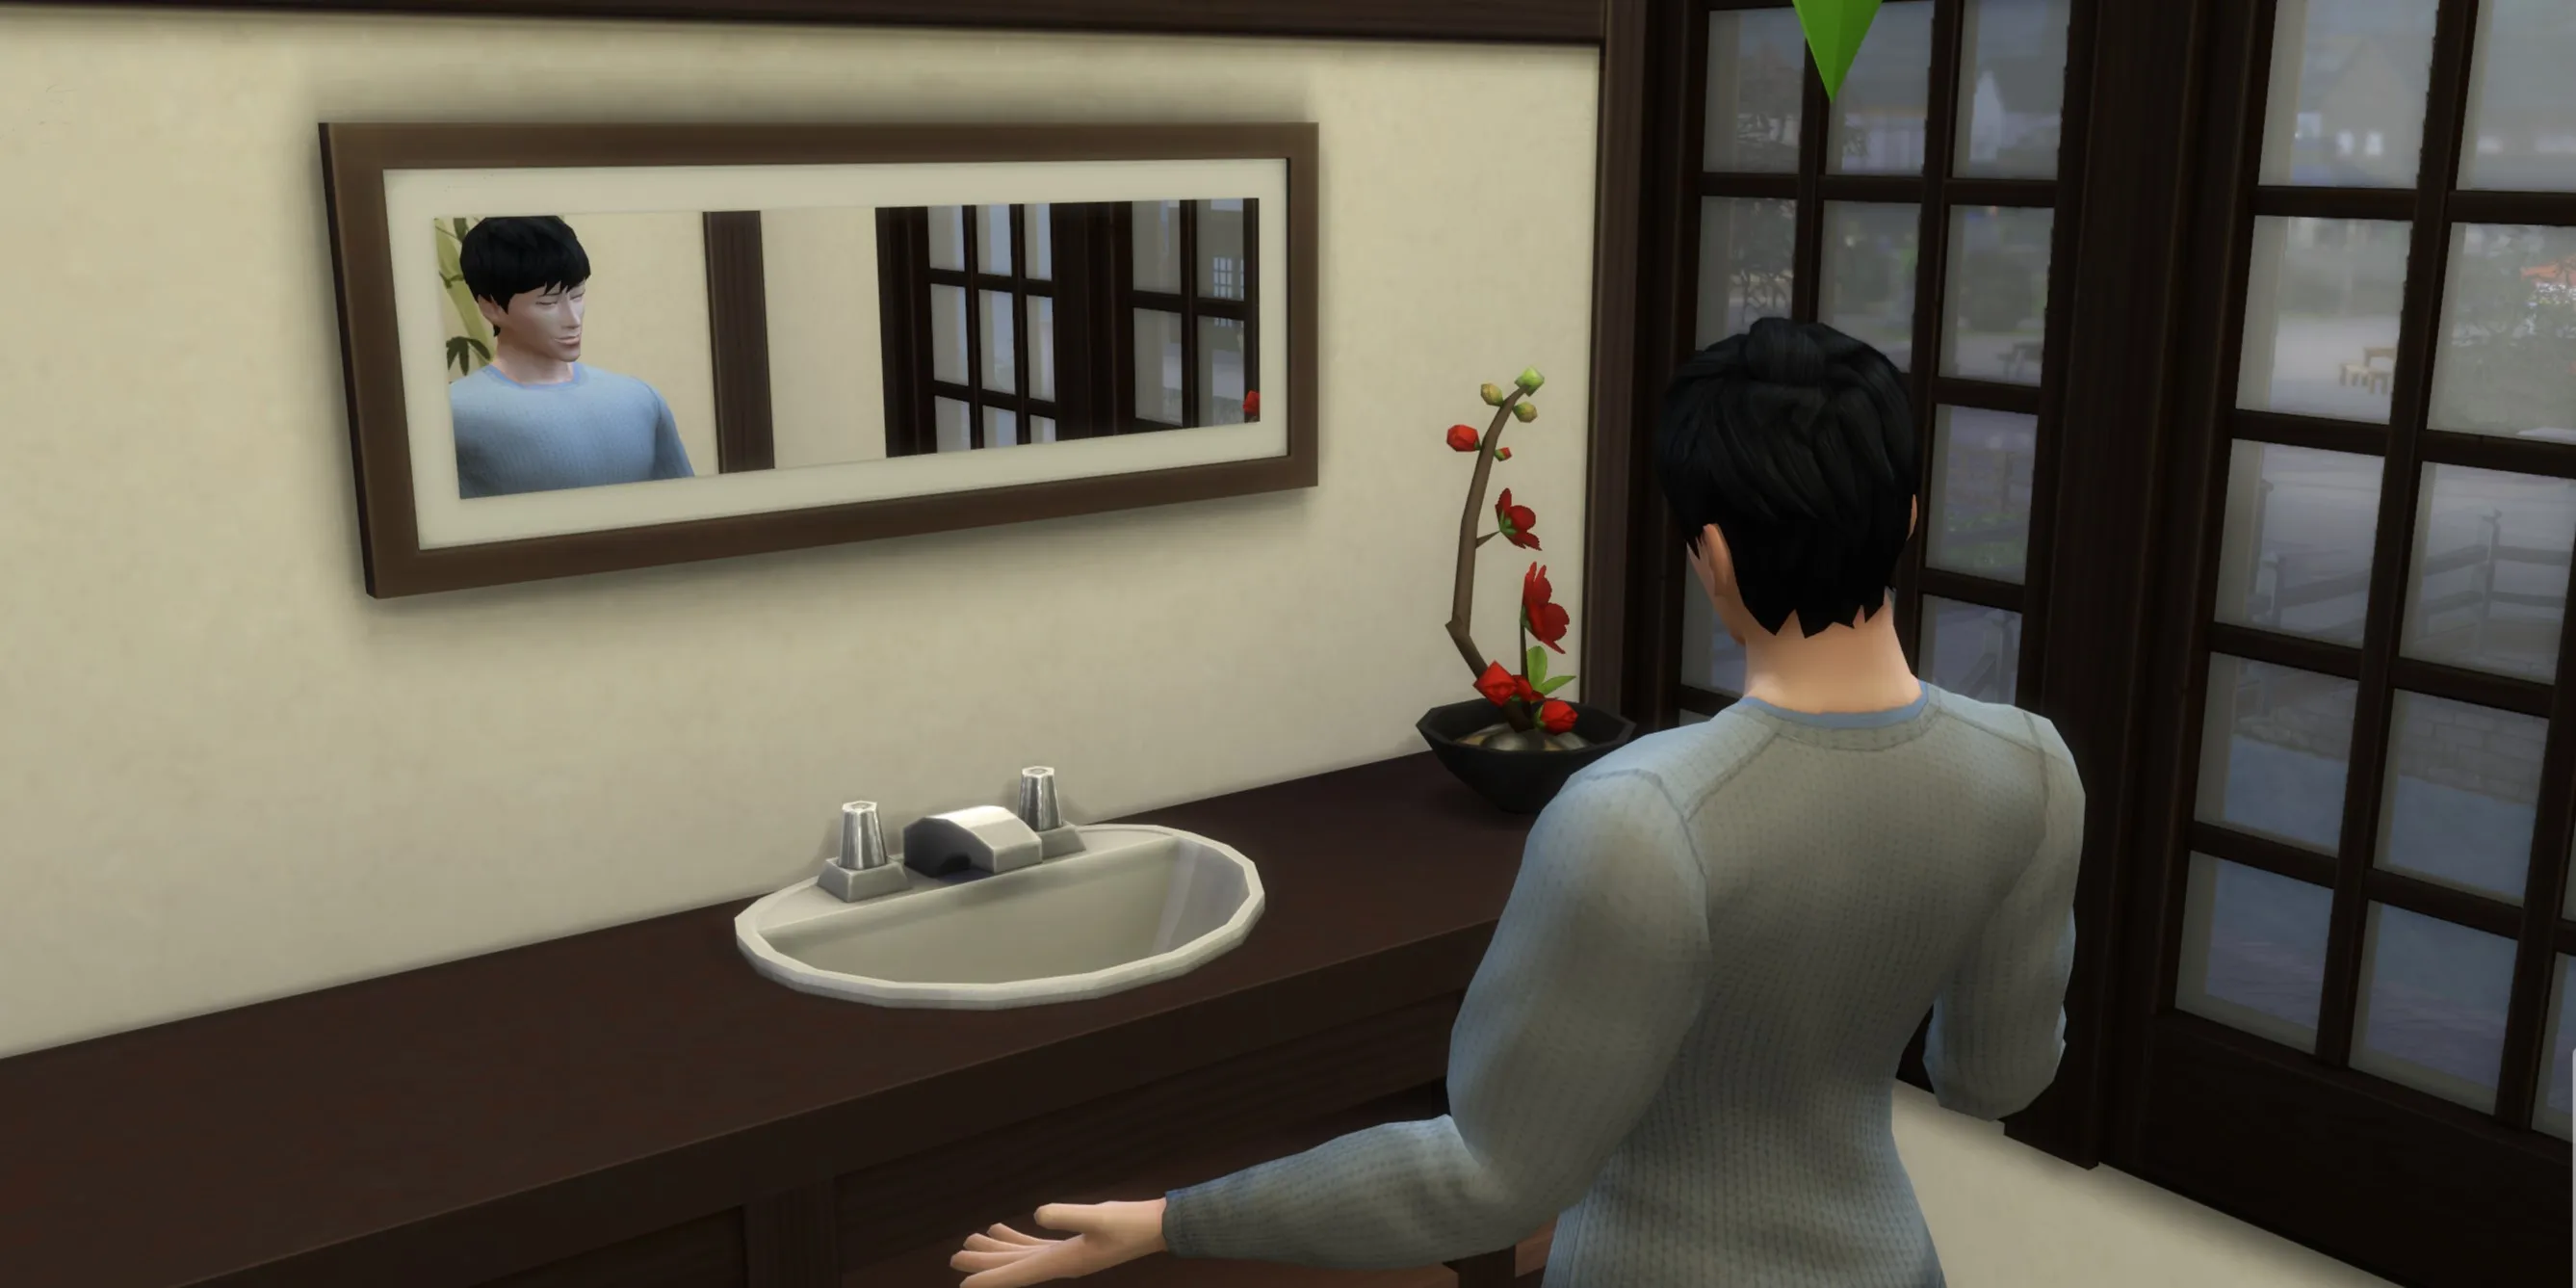 The Sims 4: A Sim Giving Himself A Pep-Talk